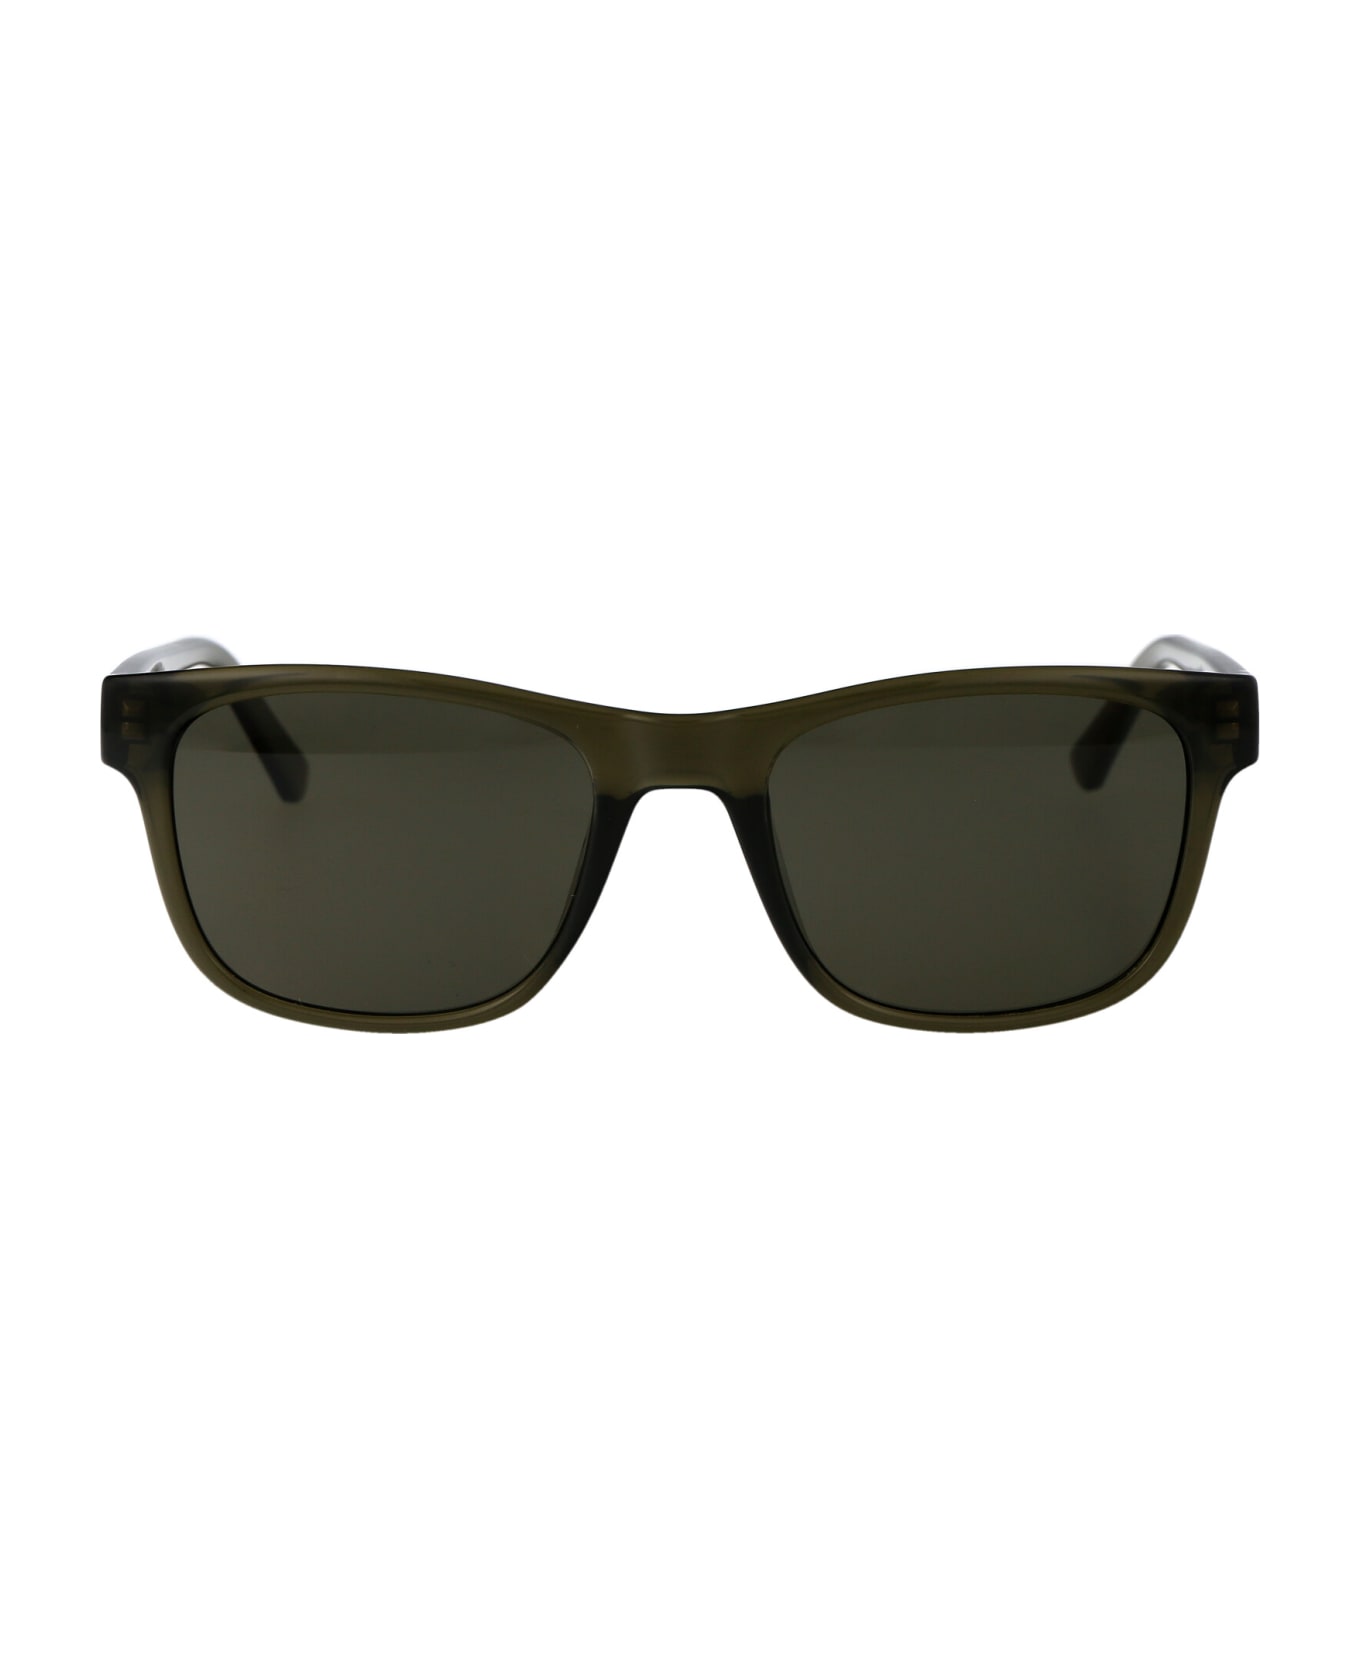 Calvin Klein Jeans Ckj20632s Sunglasses - 314 CRYSTAL OLIVE サングラス